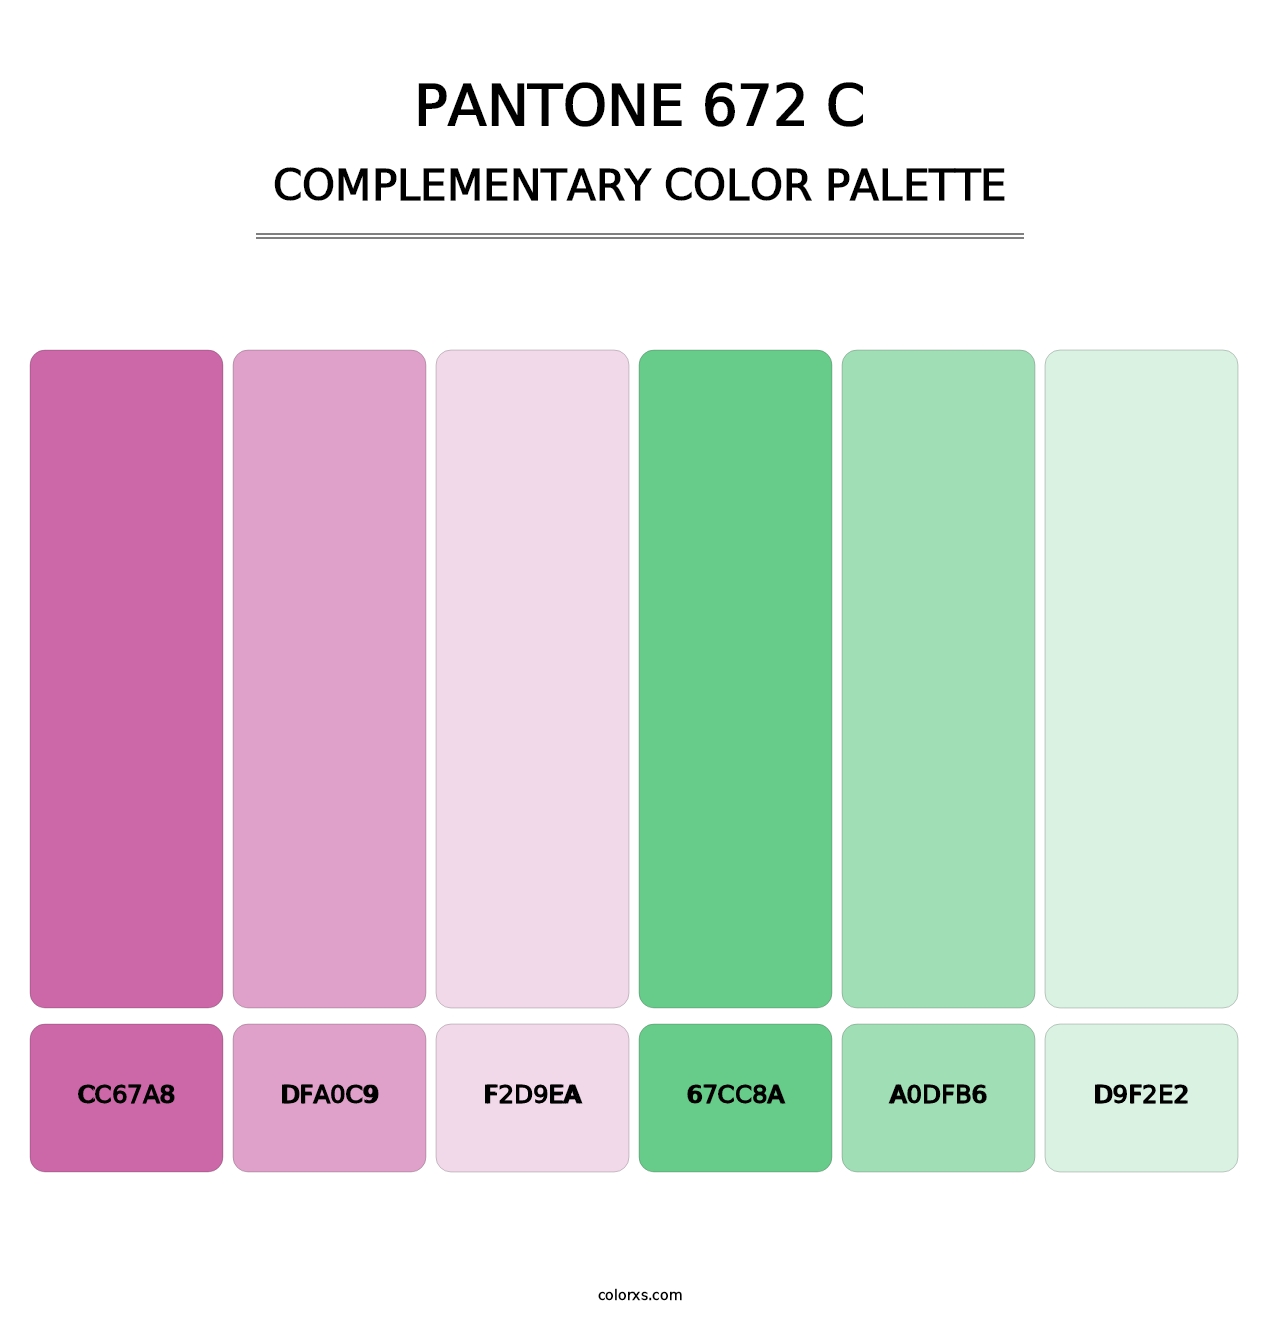 PANTONE 672 C - Complementary Color Palette